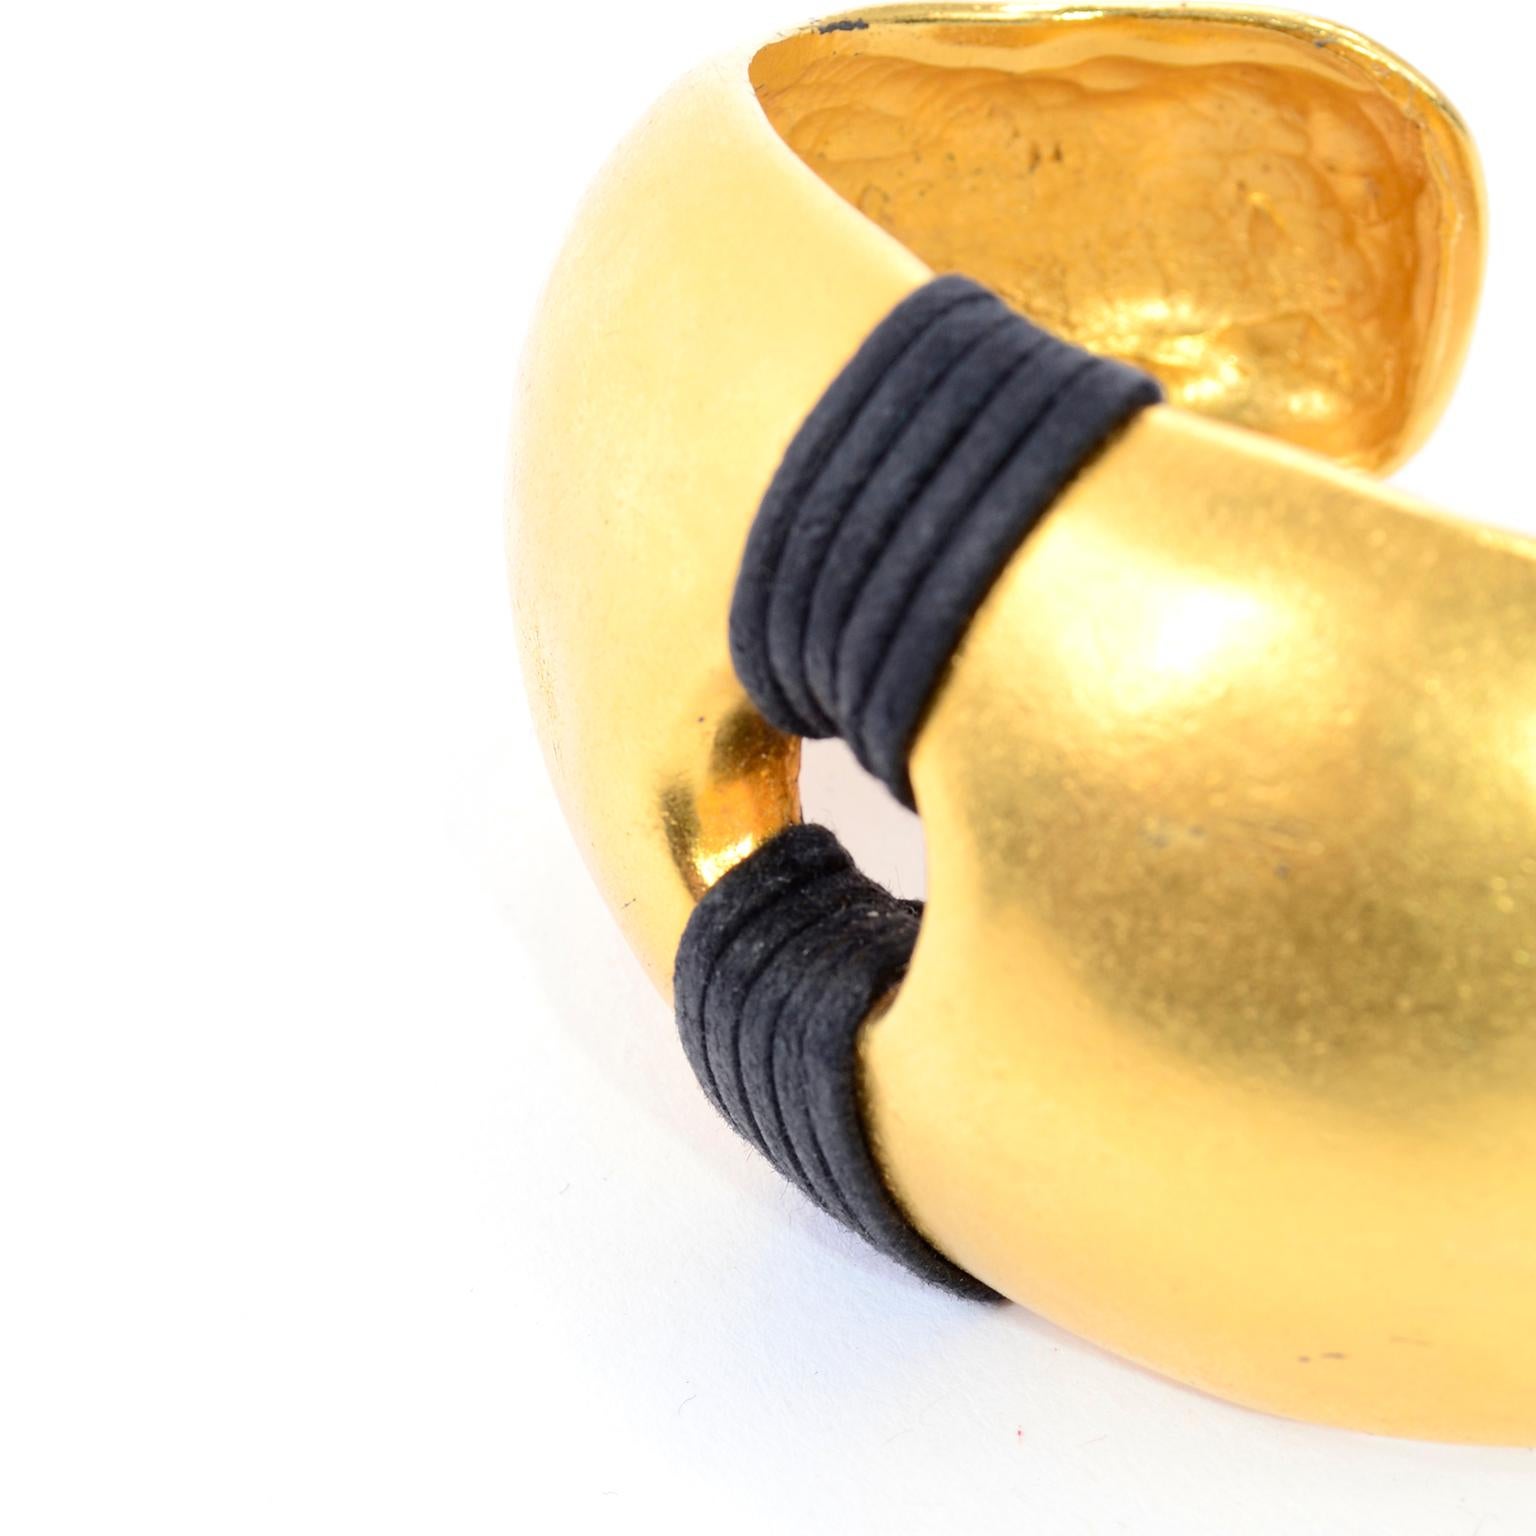 1980s Vintage Gold Plated Cuff Modern Bracelet With Black Band Details For Sale 2